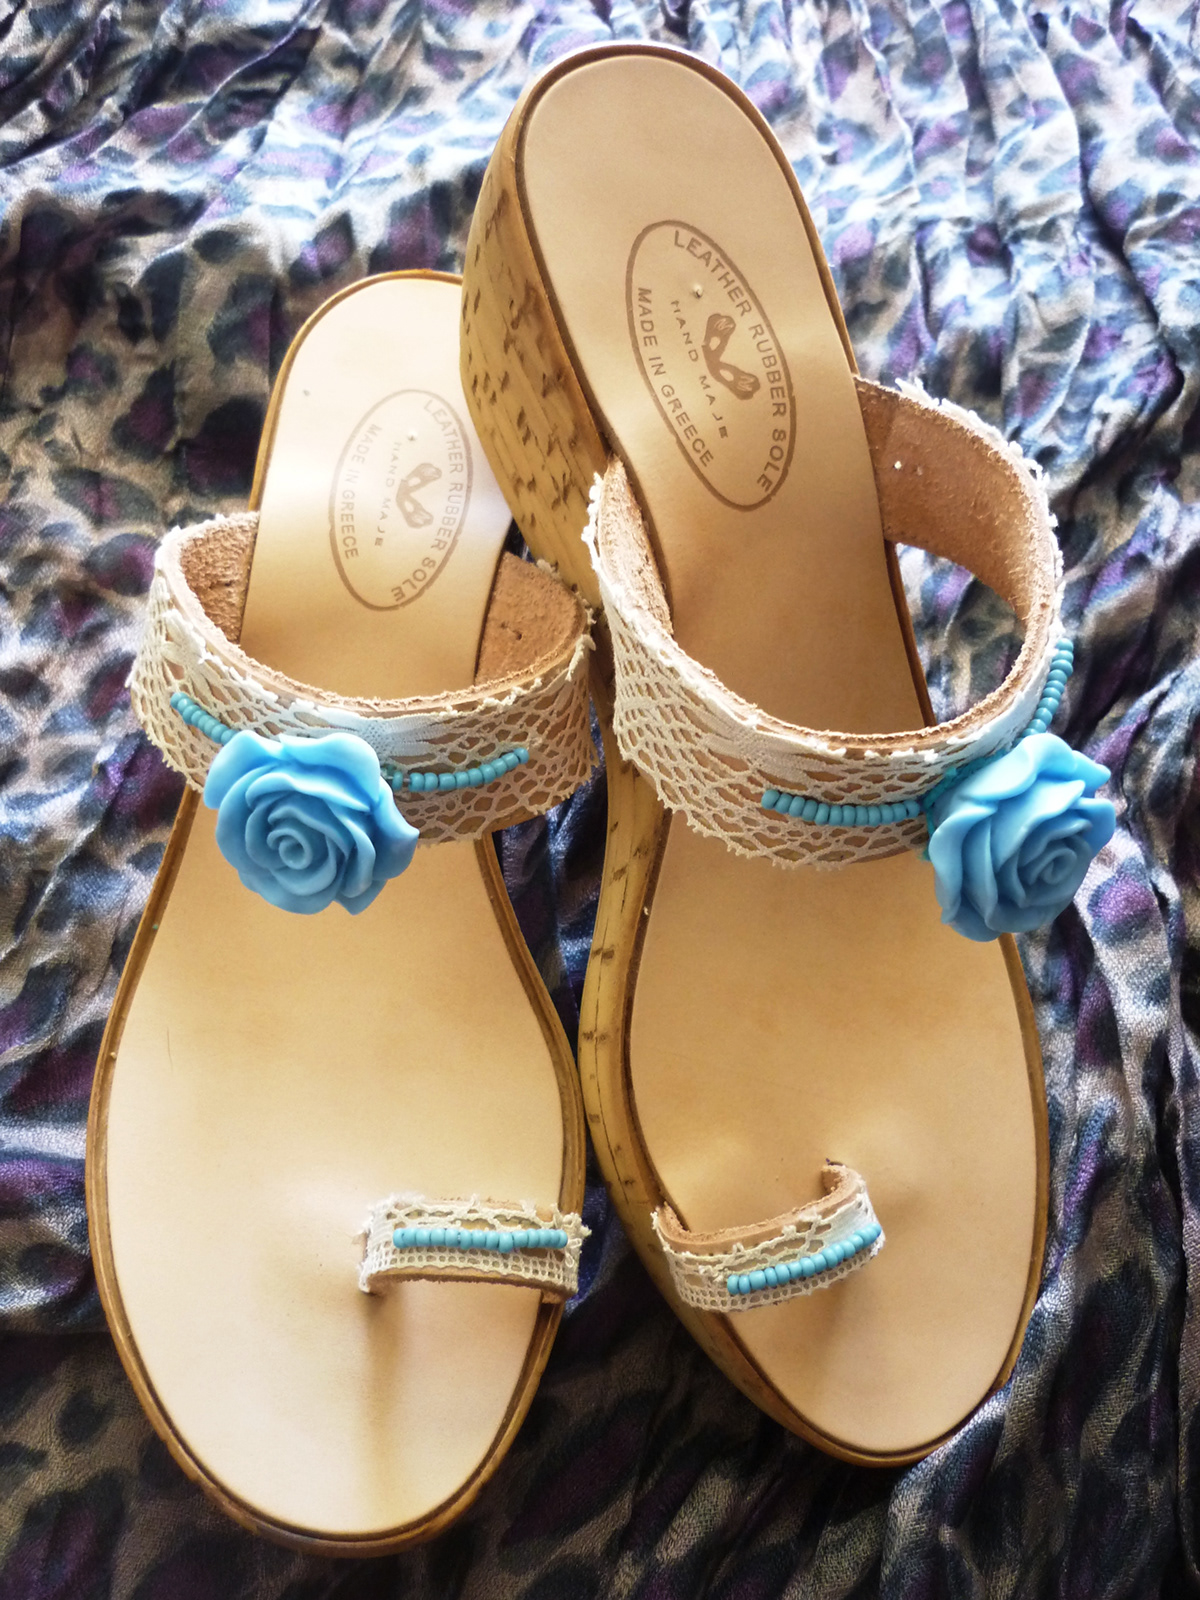 shoes handmade Sandals platforms handmade shoe by elizabeth greek sandals χειροποιητα σανδαλια